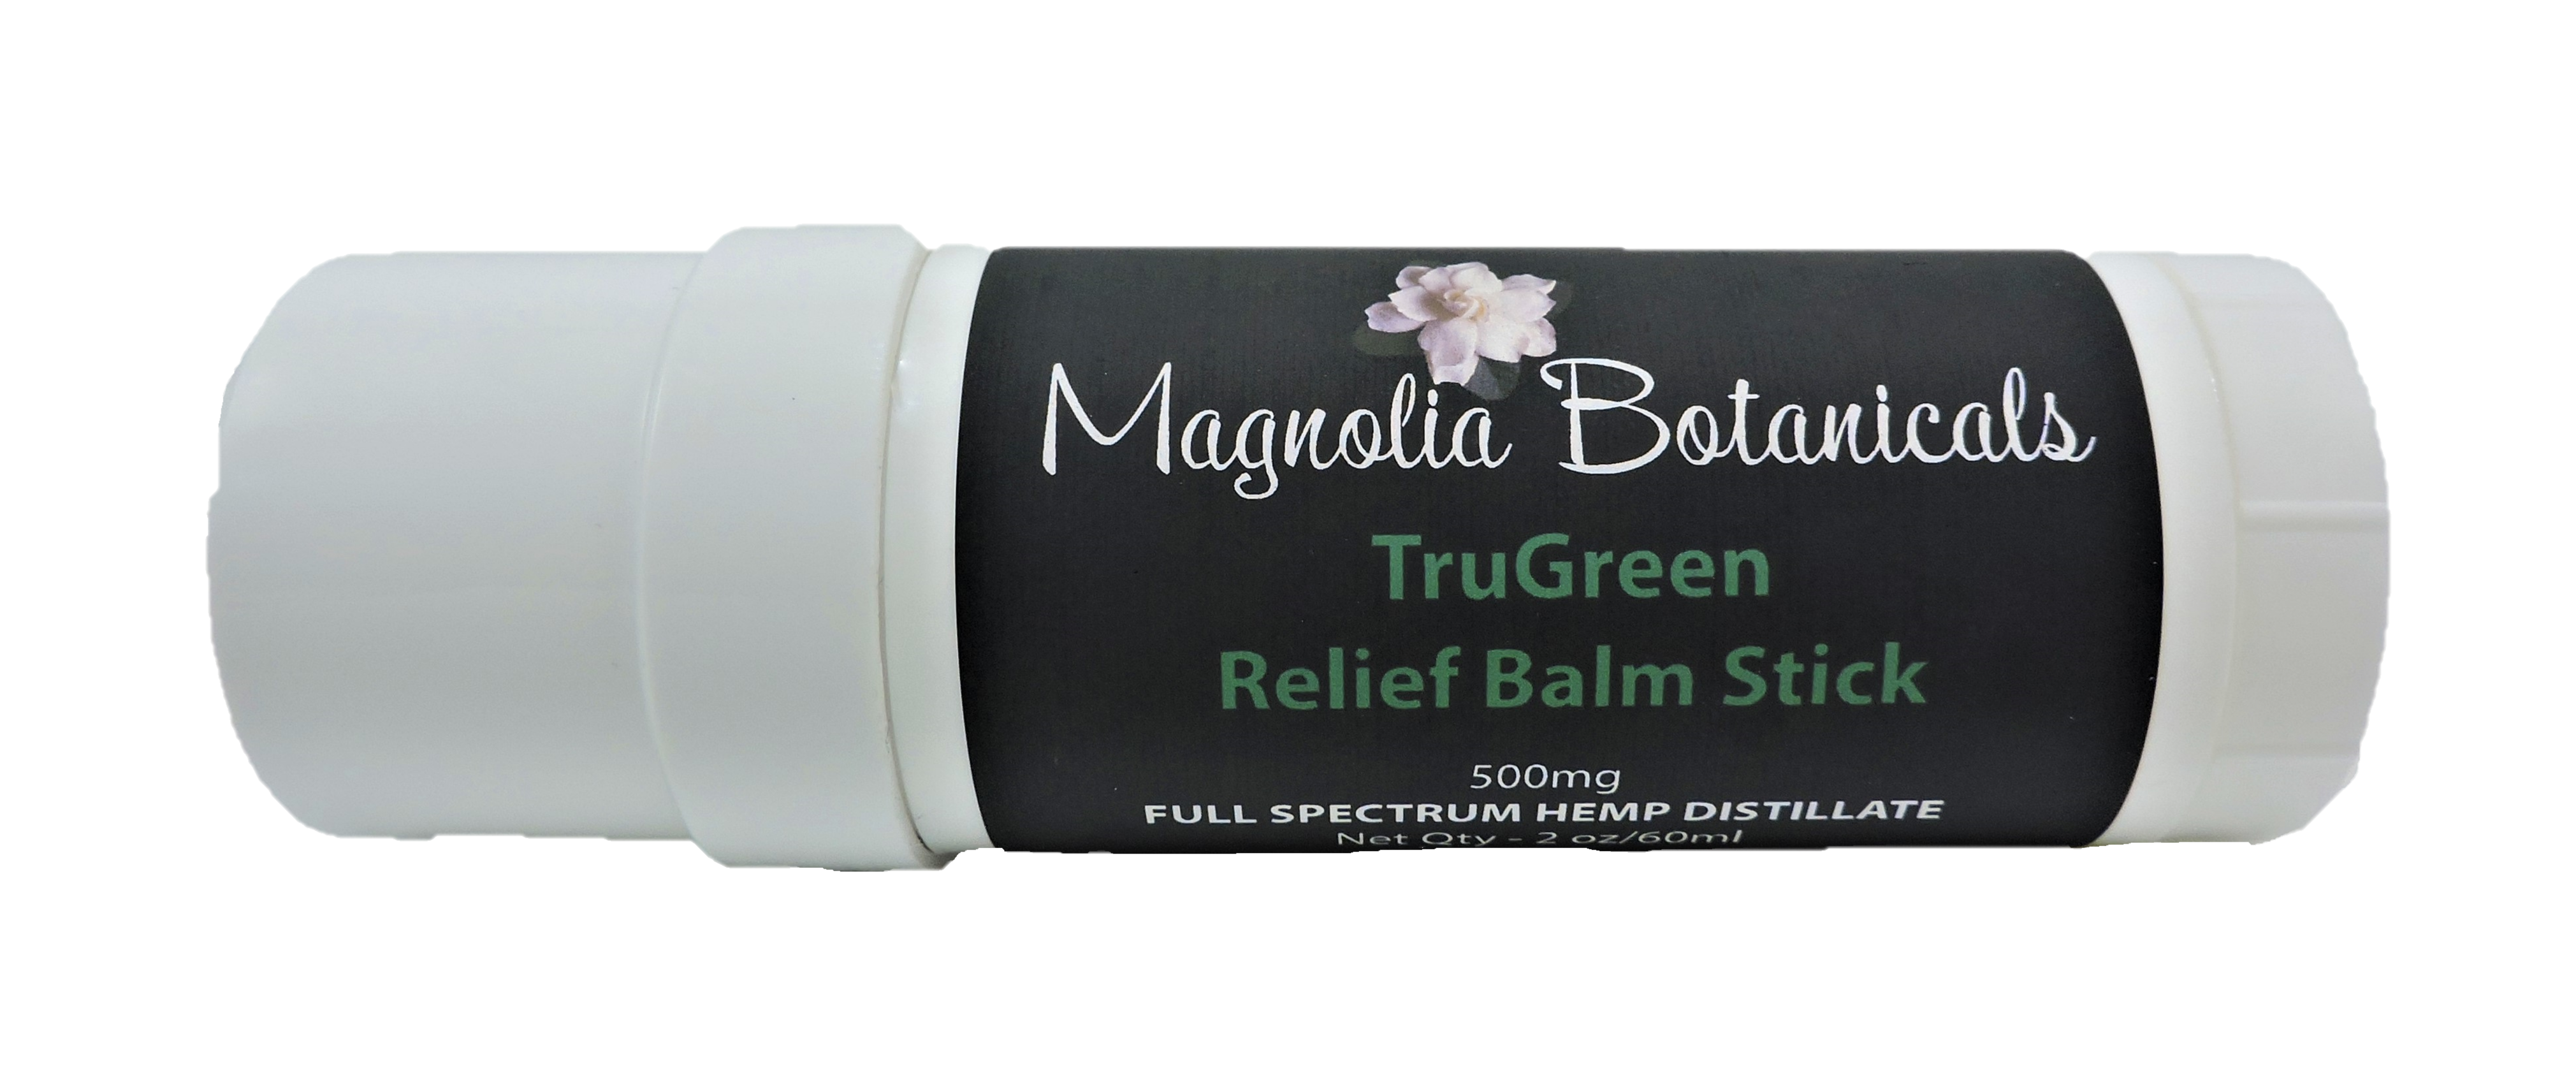 Magnolia Botanicals TruGreen Relief Balm Stick with 600mg Full Spectrum Hemp Extract